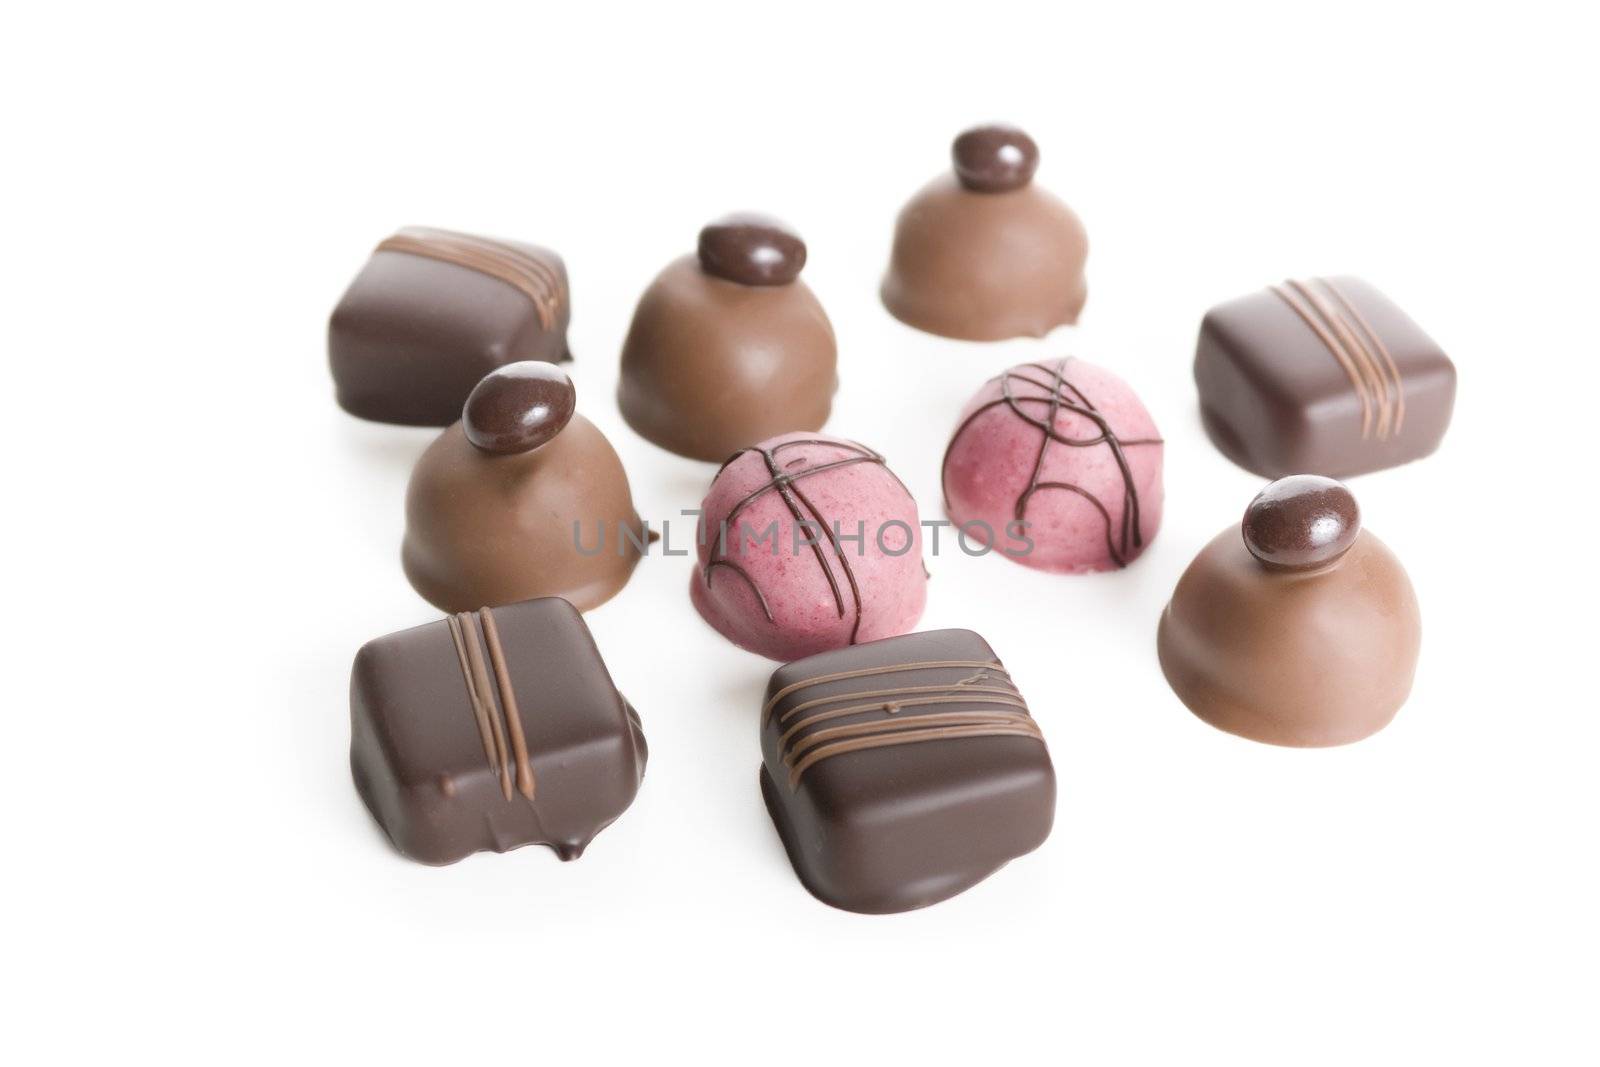 Gourmet Chocolates by charlotteLake